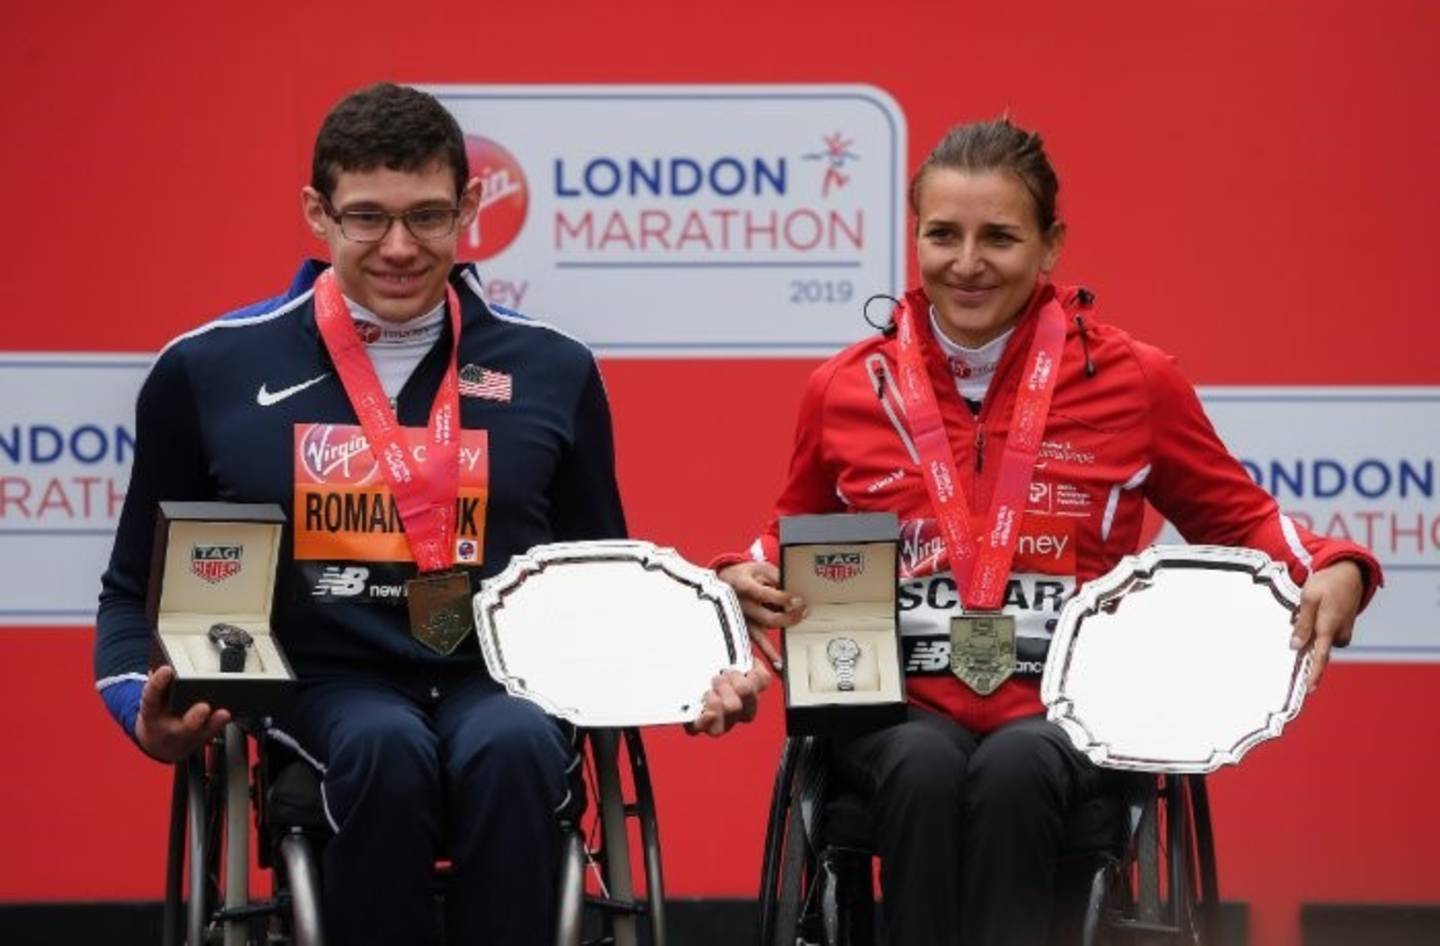 Daniel Romanchuk (left) and Manuela Schär (right) on podium at 2019 Virgin Money London Marathon